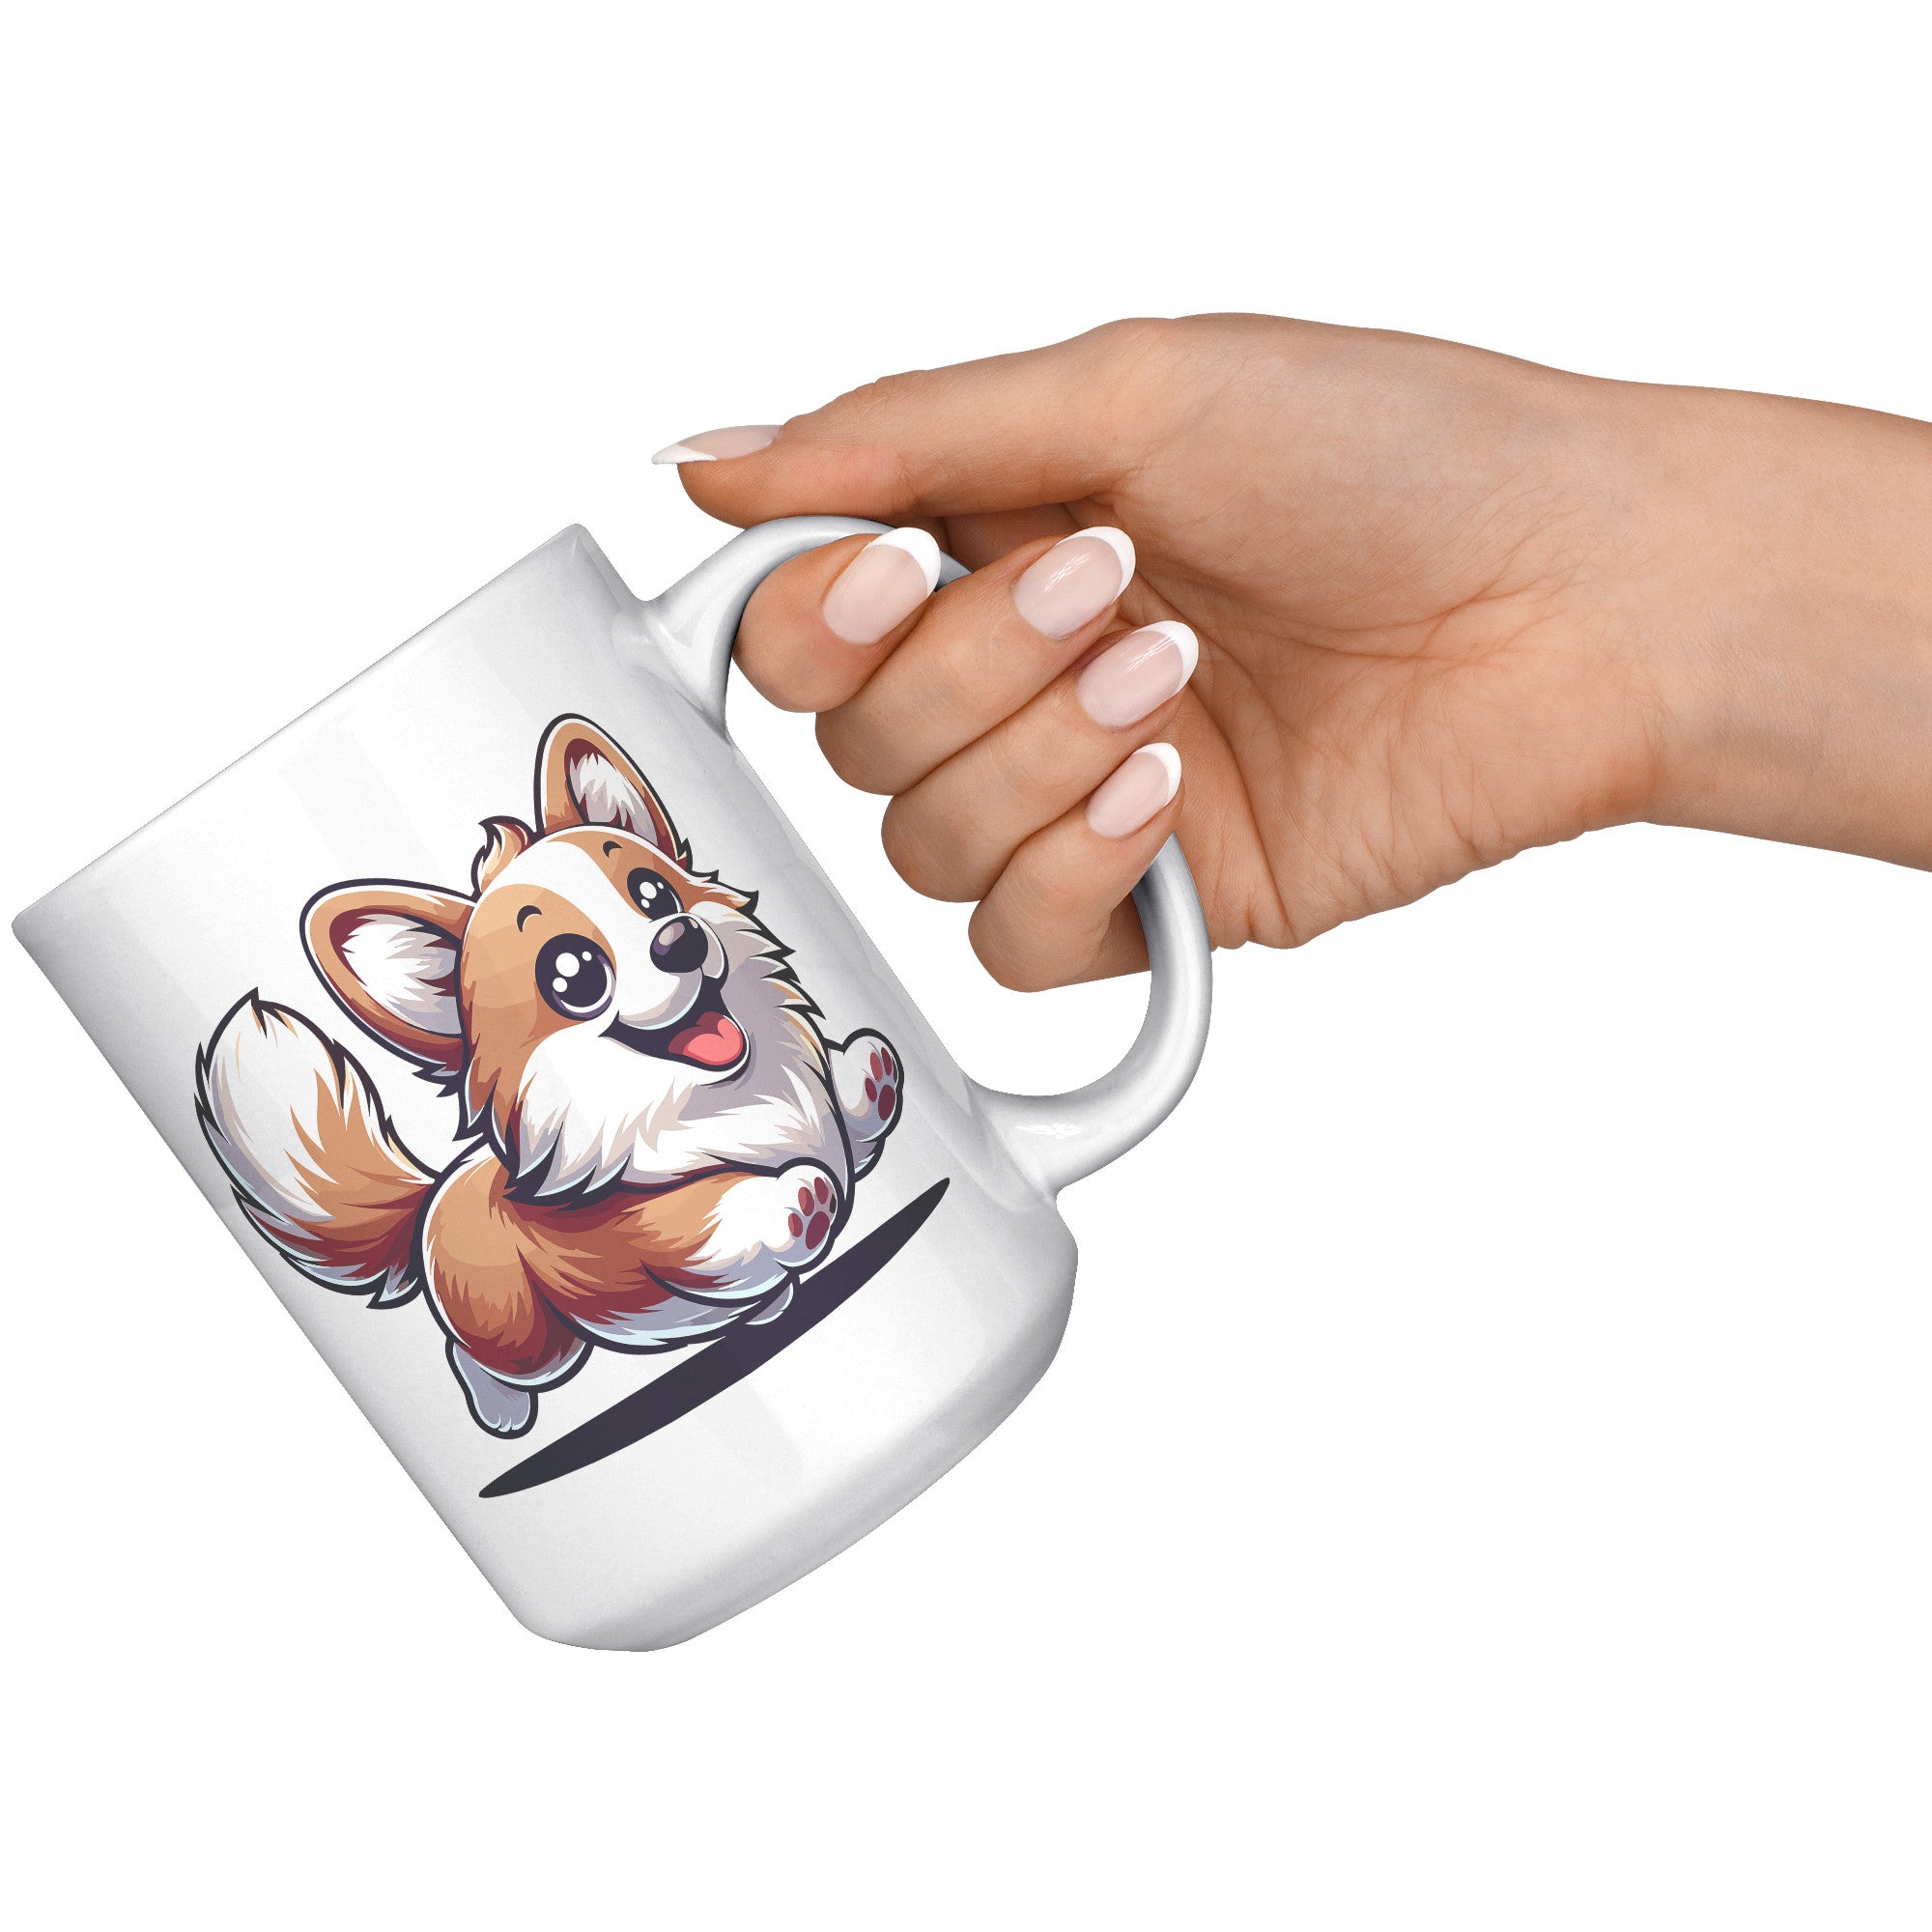 15oz Corgi Lover Cartoon Mug - Adorable Corgi Dog Mug - Perfect Gift for Corgi Owners - Cute Pembroke Welsh Corgi Mug" - A1